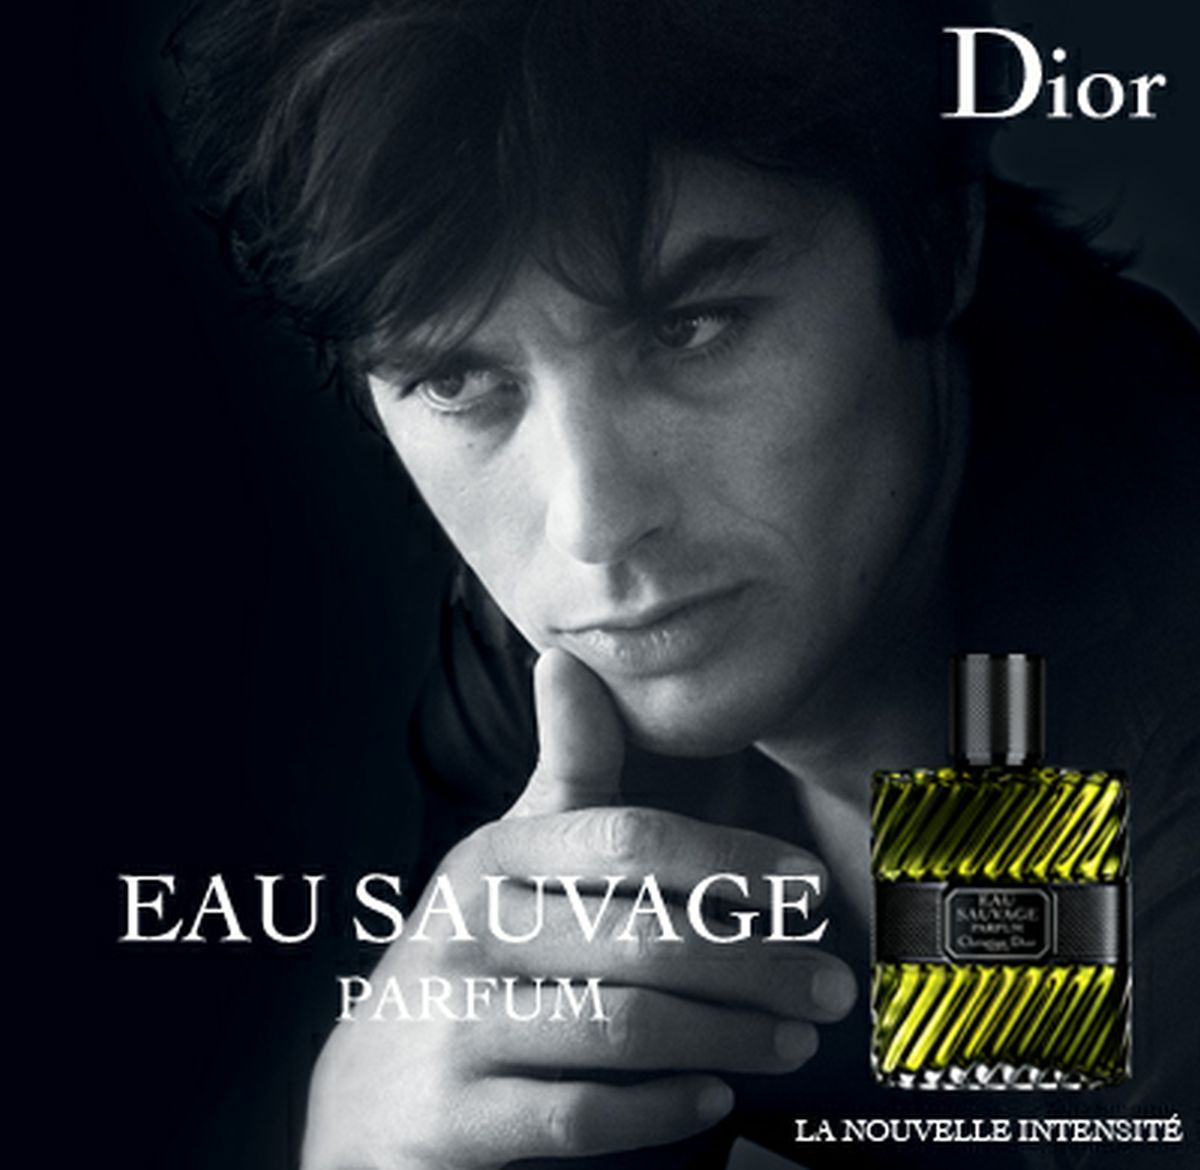 Eau Sauvage Parfum Christian Dior cologne - a fragrance for men 2012